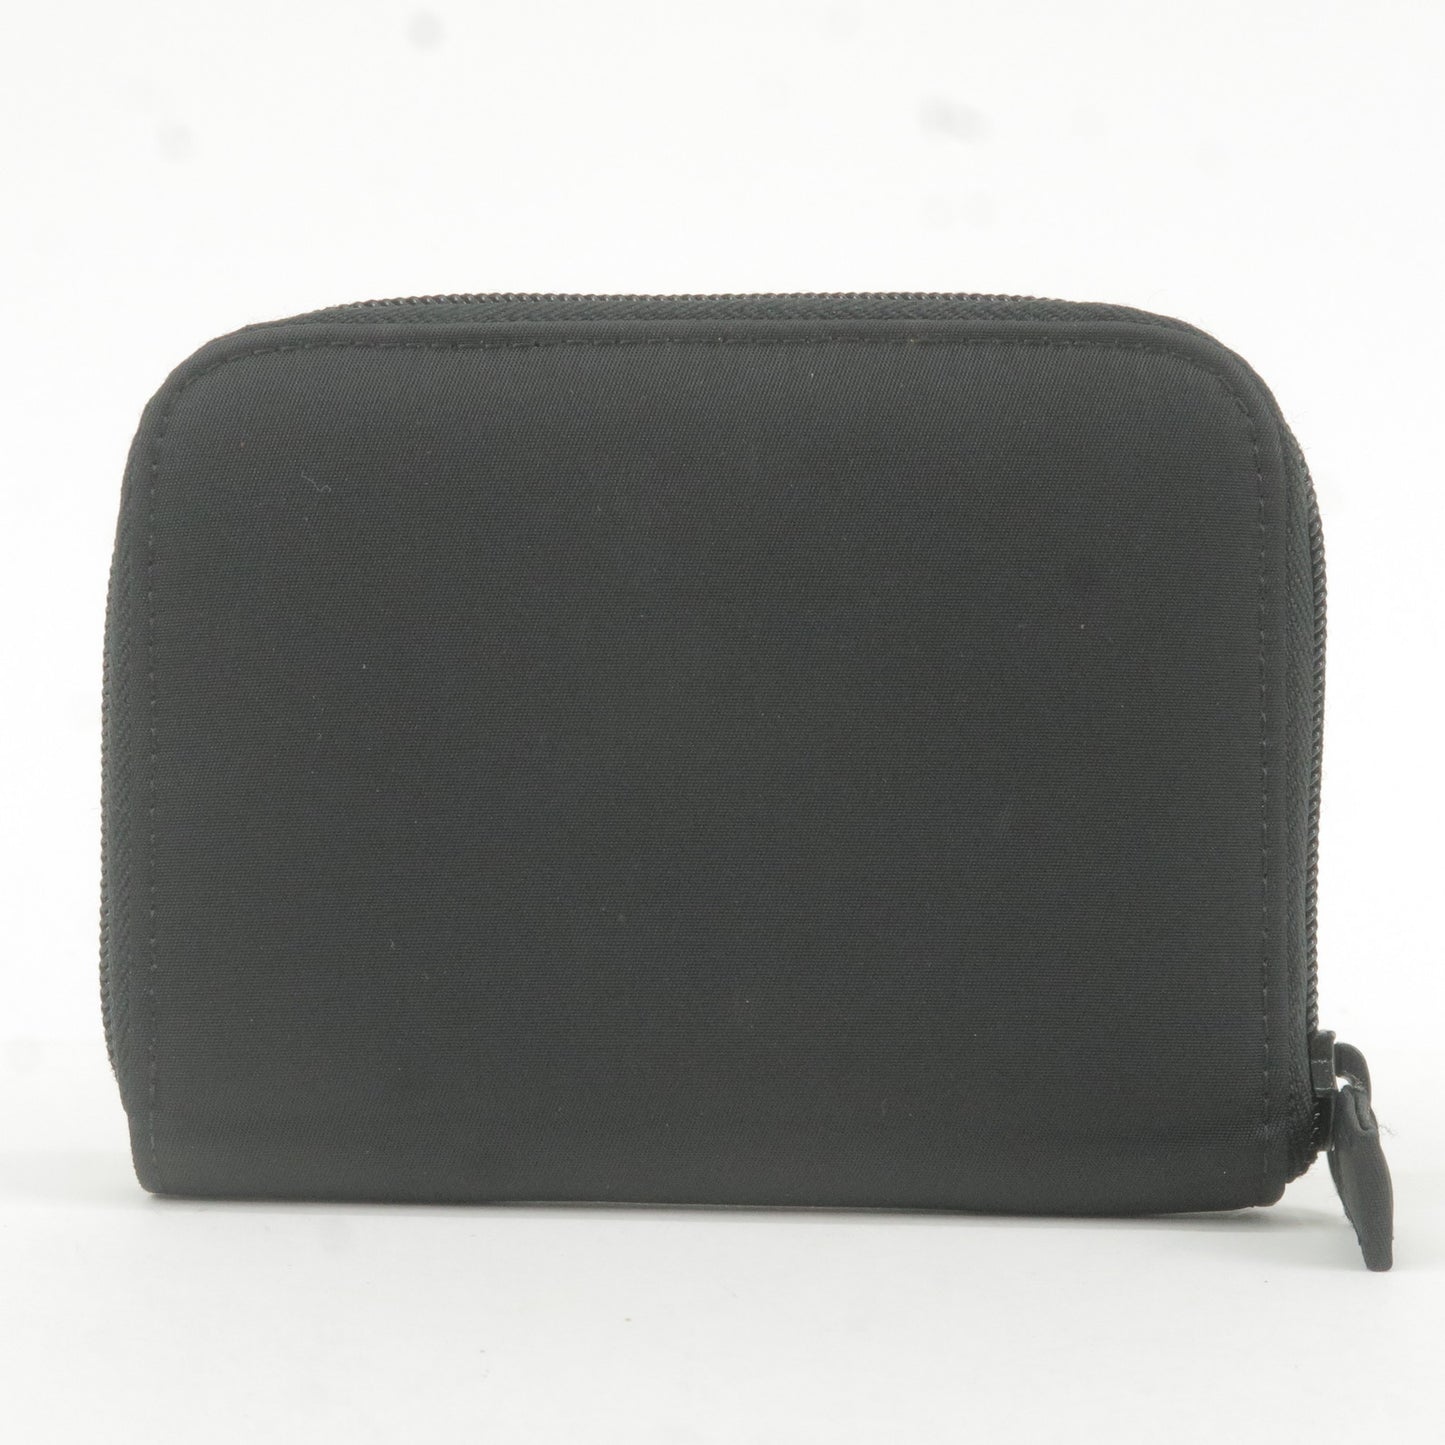 PRADA Logo Nylon Round Zipper Wallet NERO Black M606